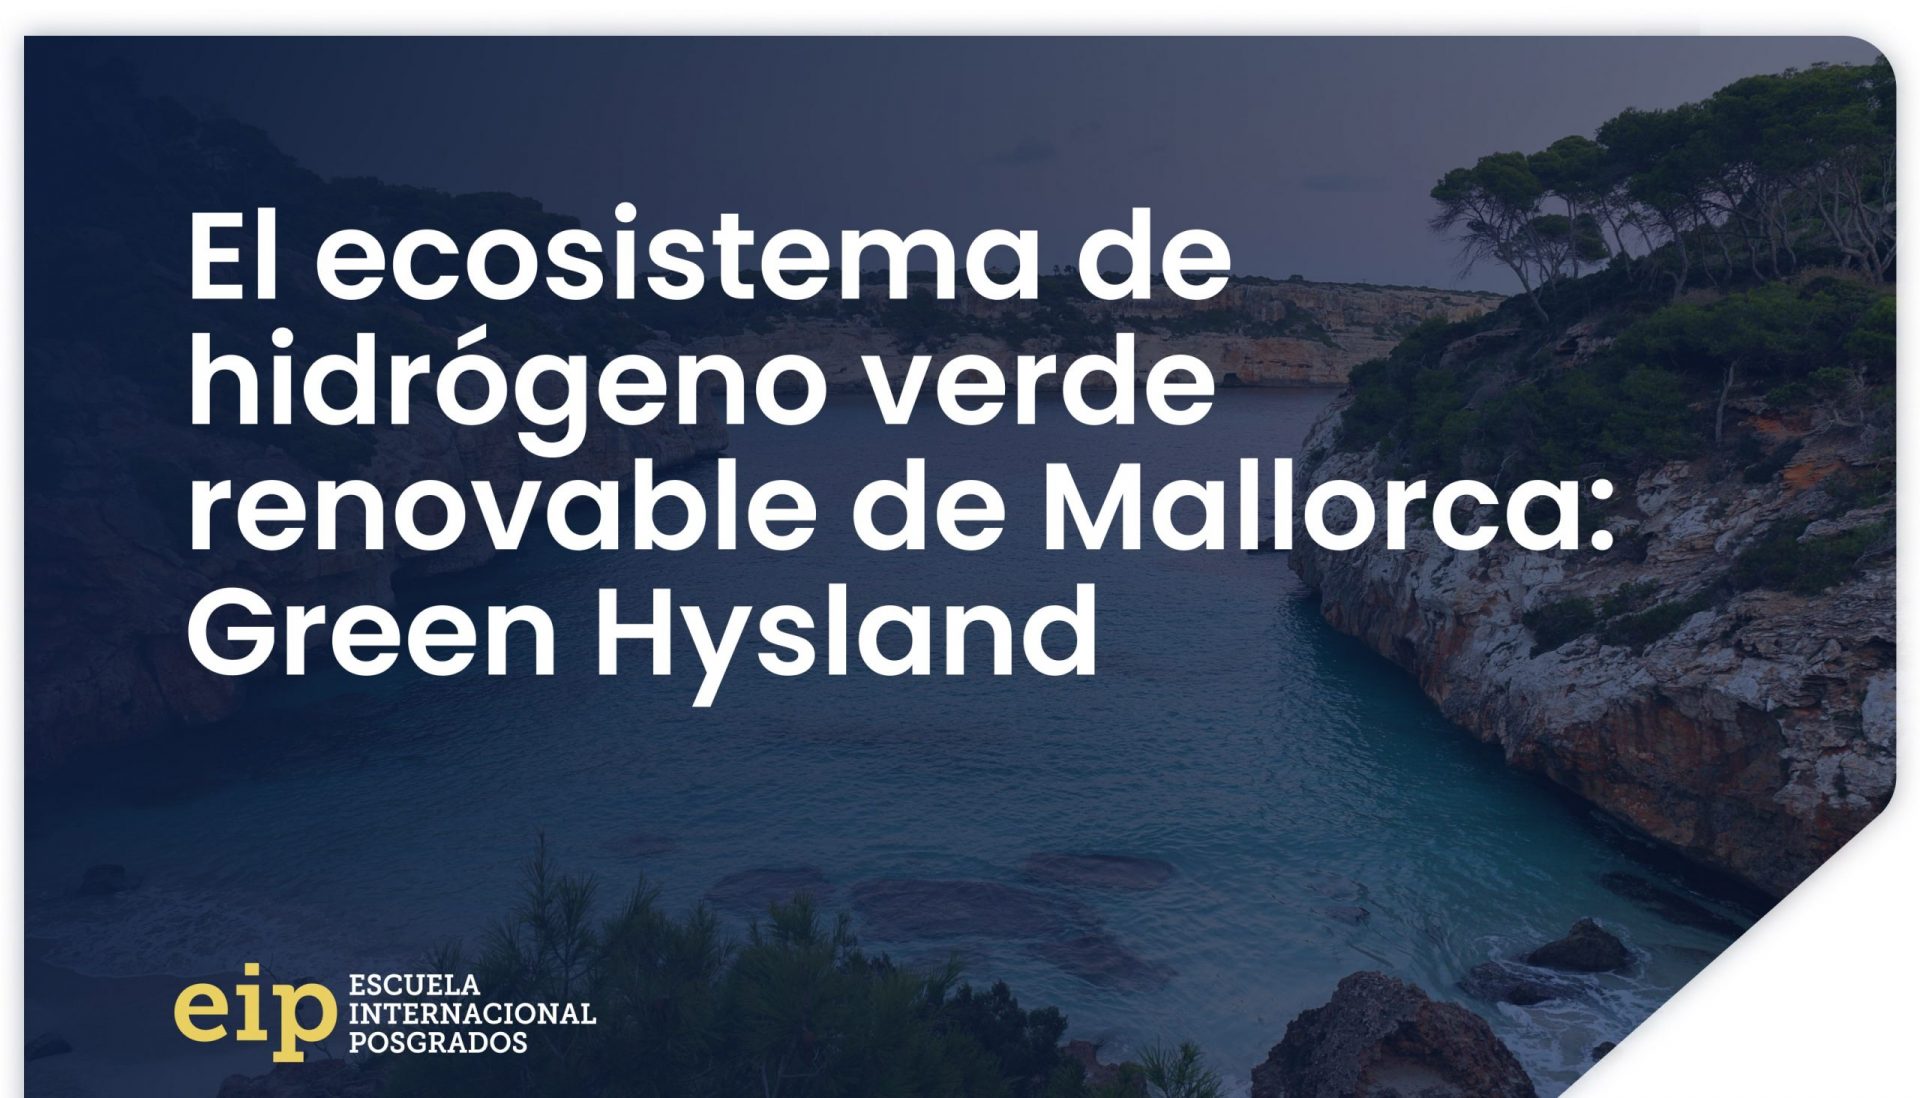 Proyecto Green Hysland de hidrógeno verde en Mallorca scaled